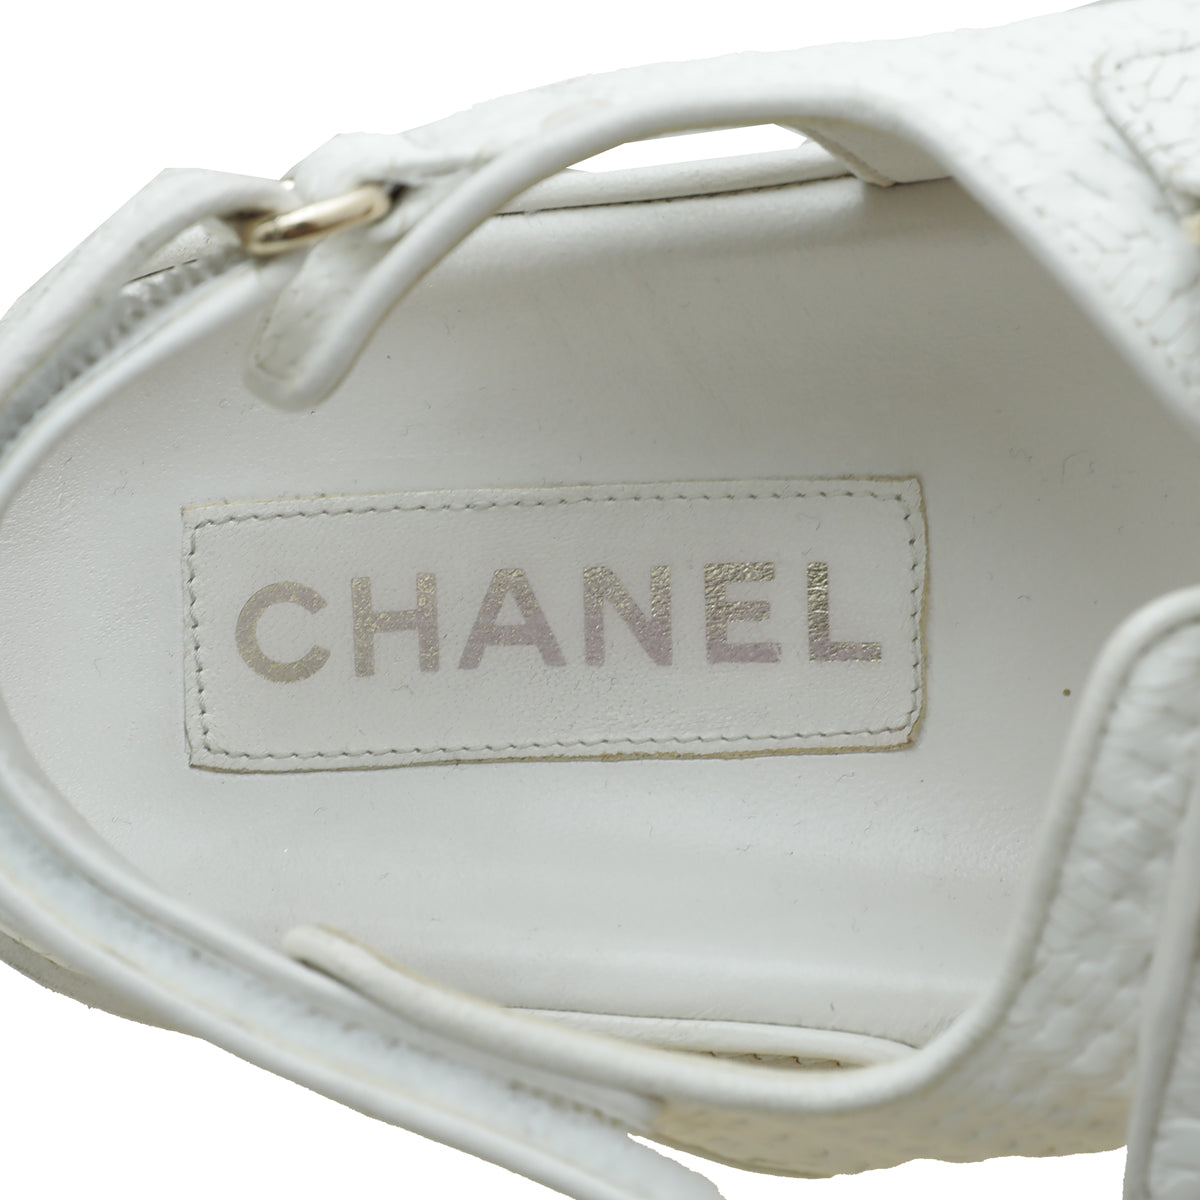 Chanel White CC Button Logo Dad Sandals 41